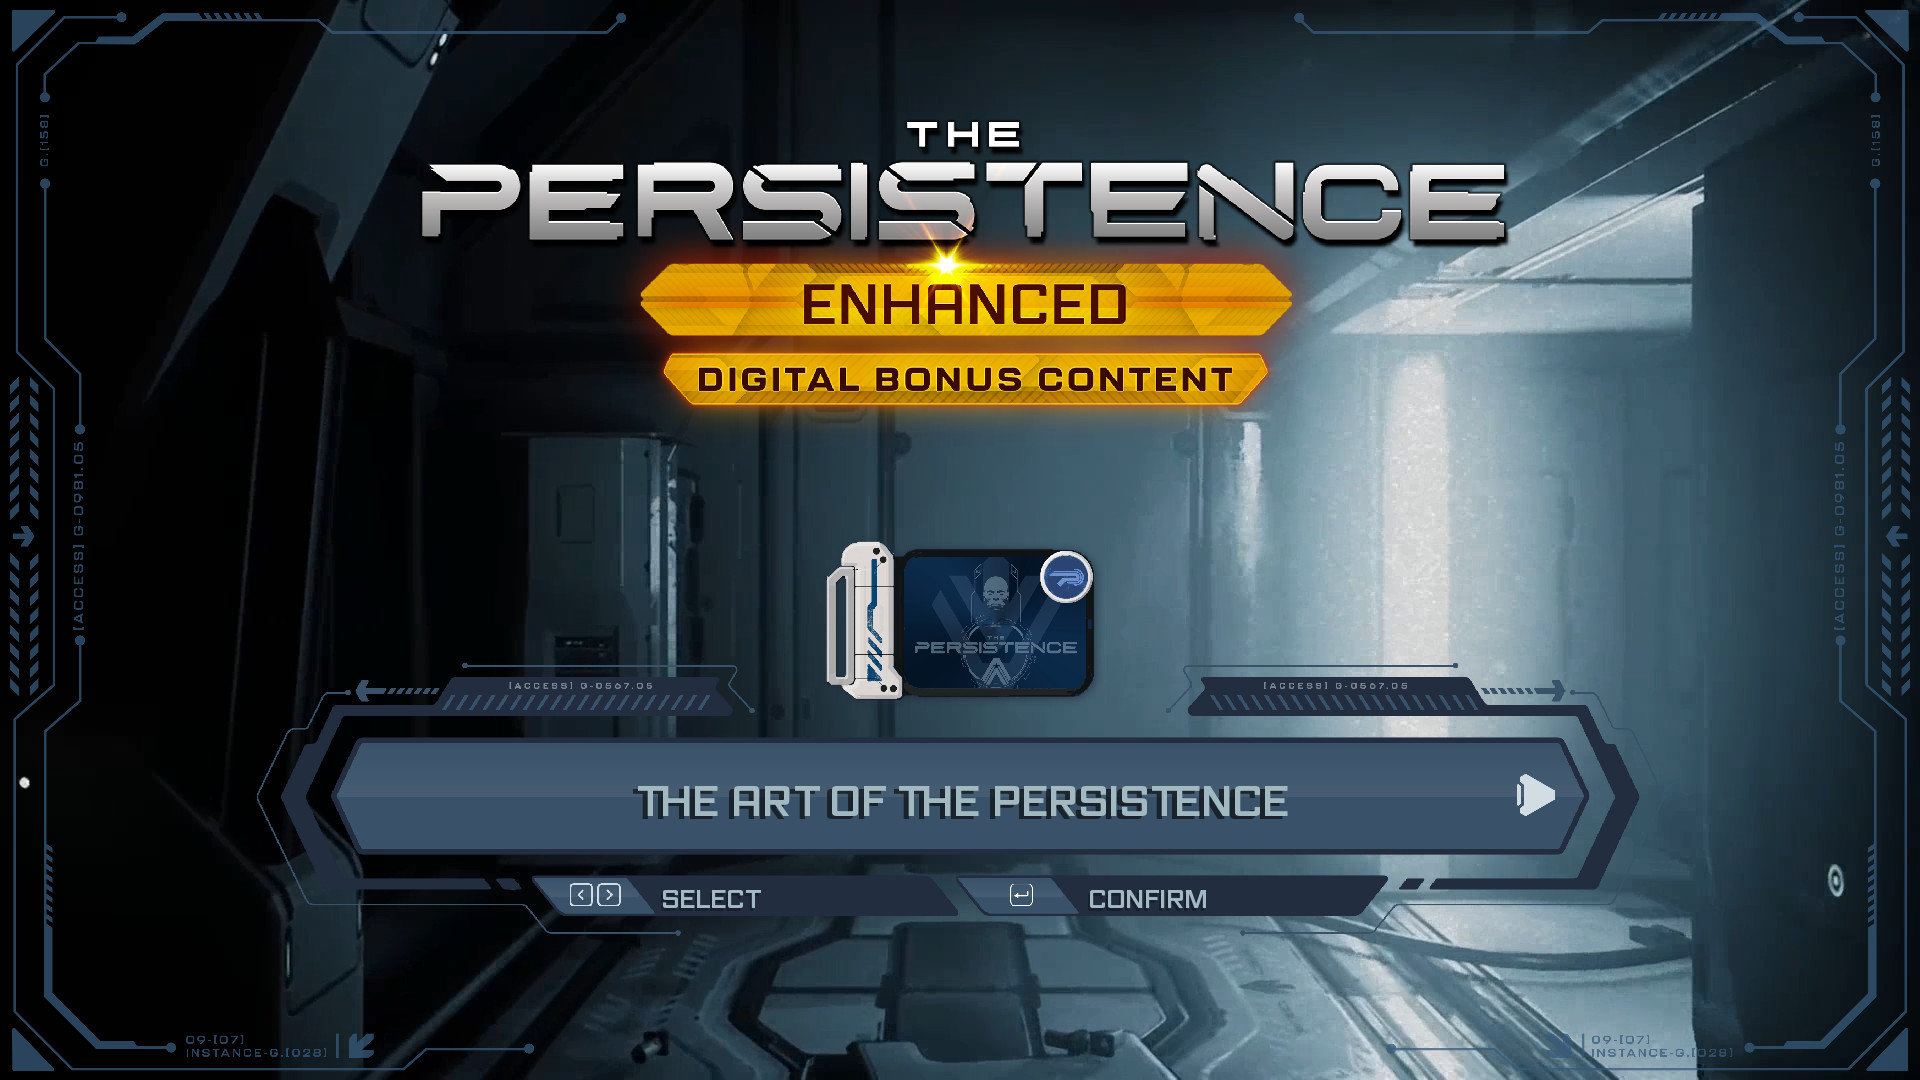 The Persistence: Digital Bonus Content Featured Screenshot #1